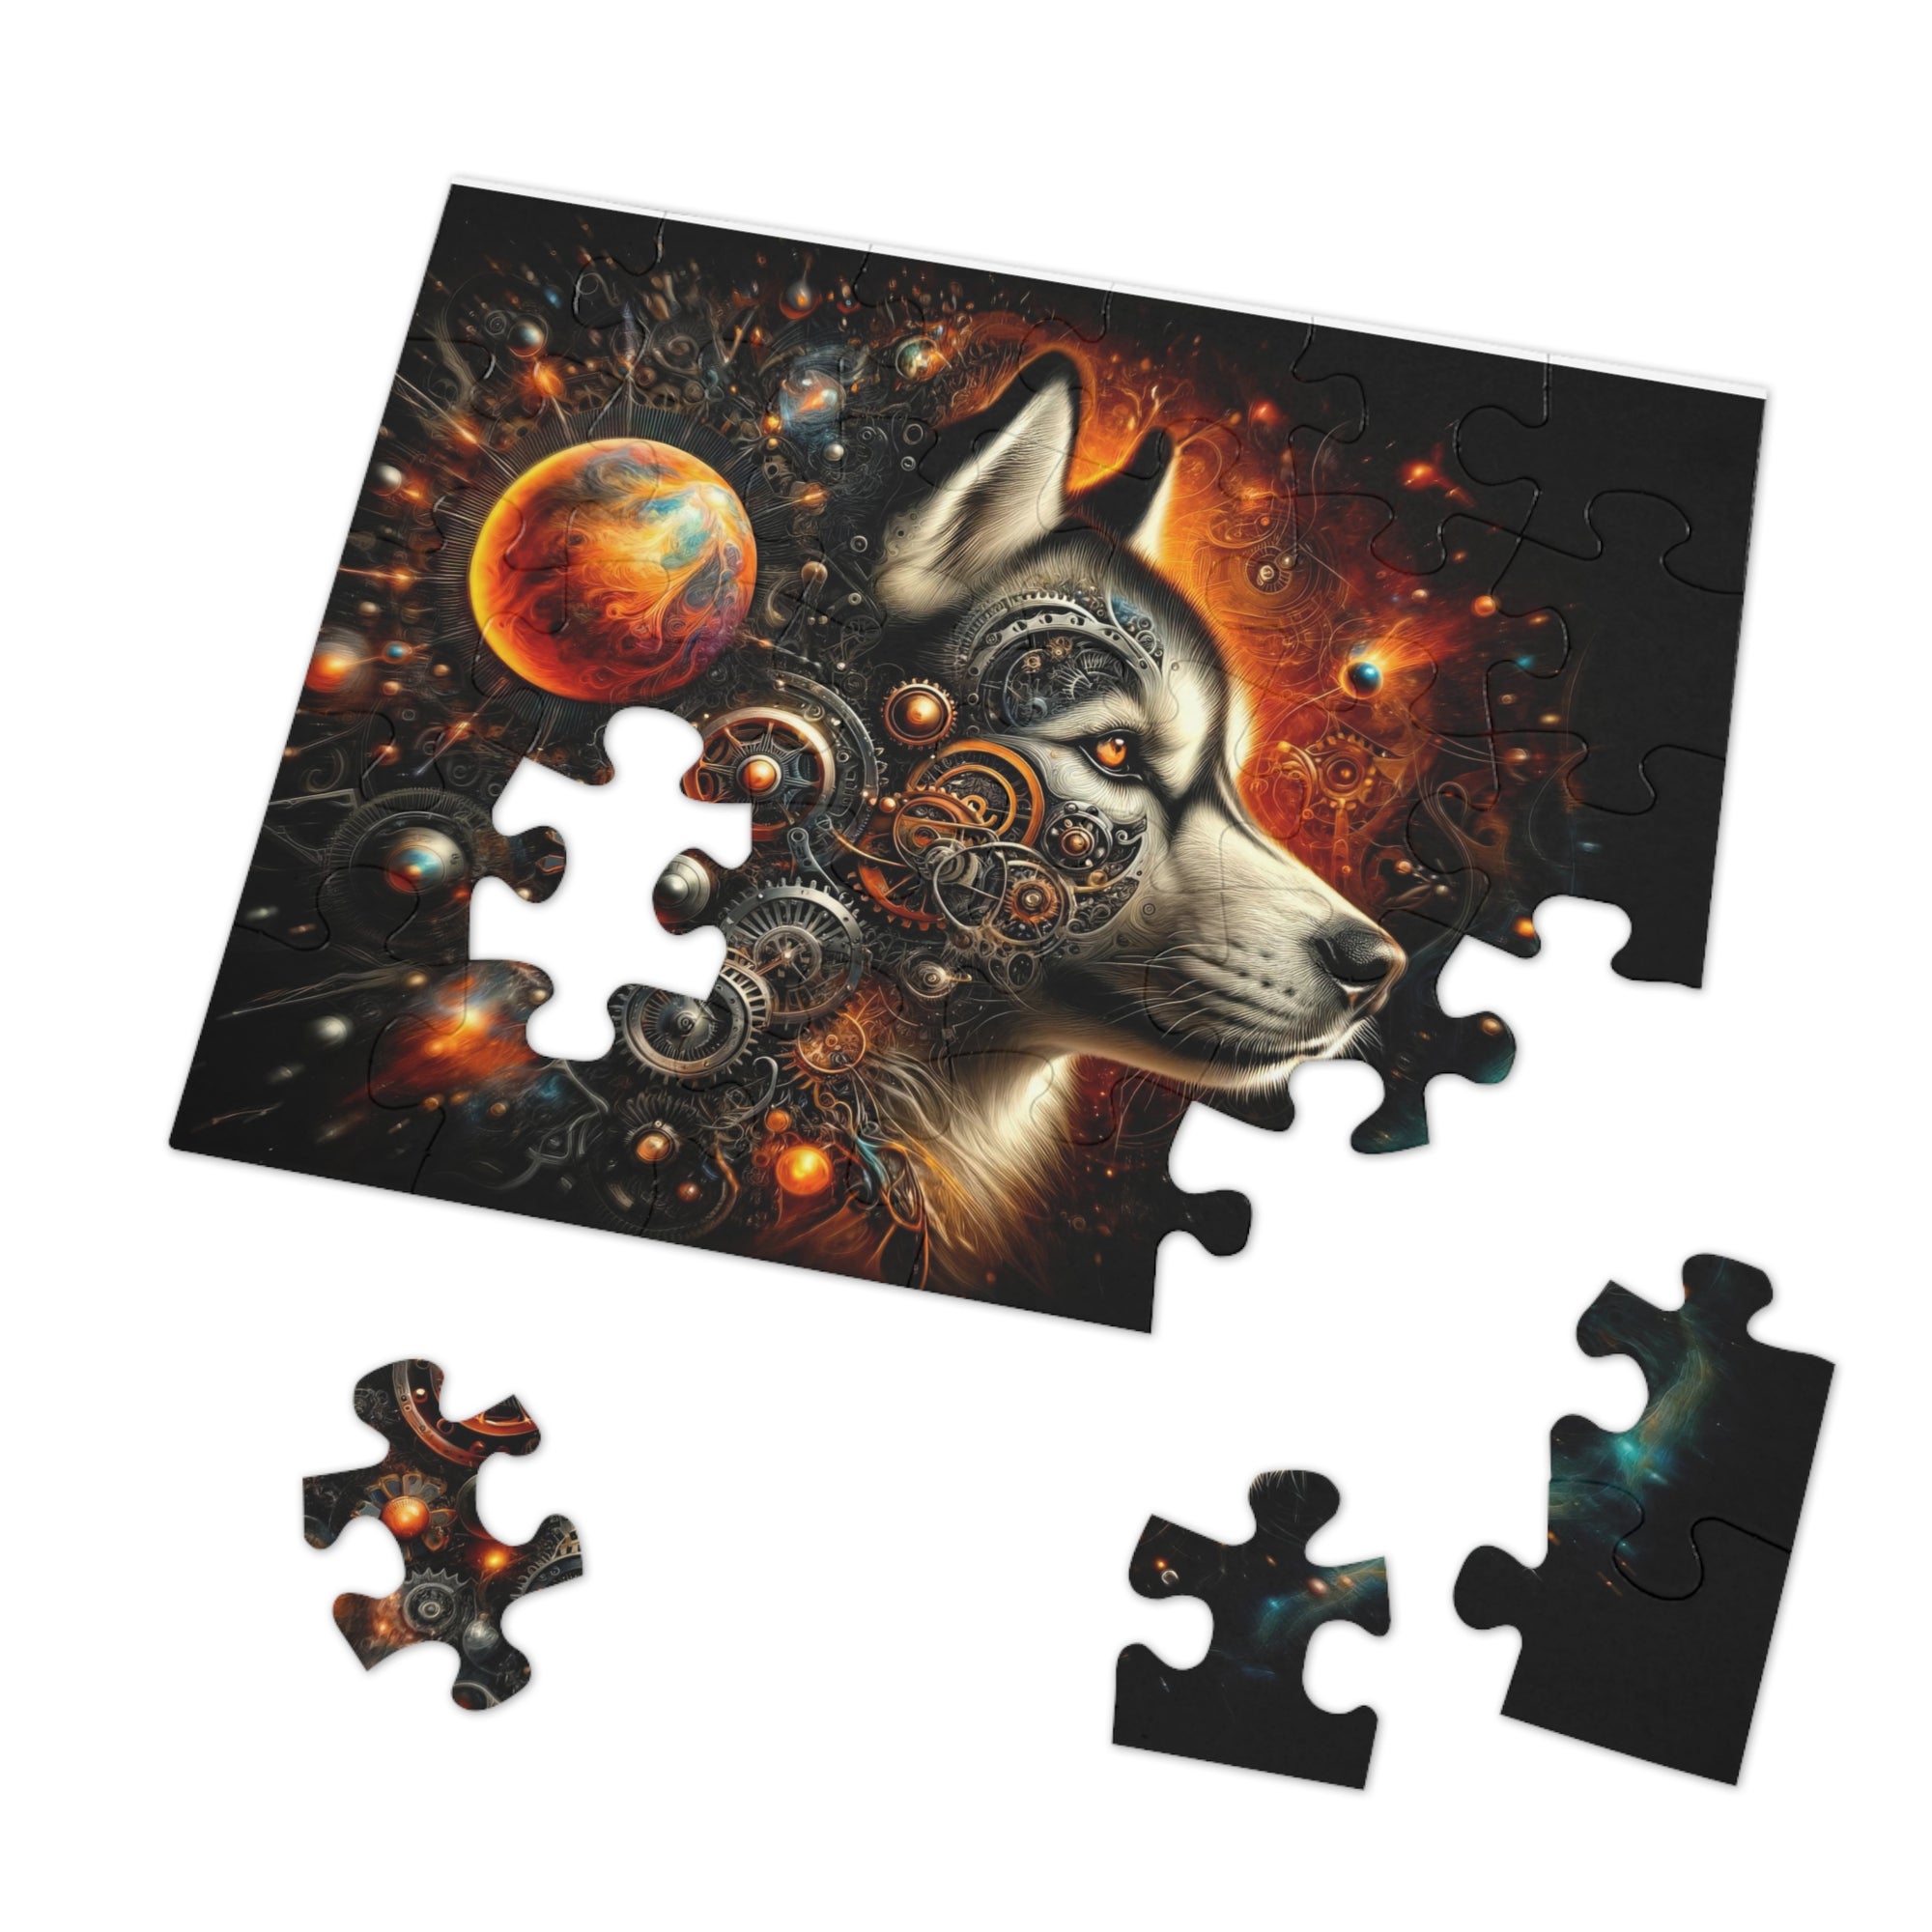 The Husky's Gaze Jigsaw Puzzle